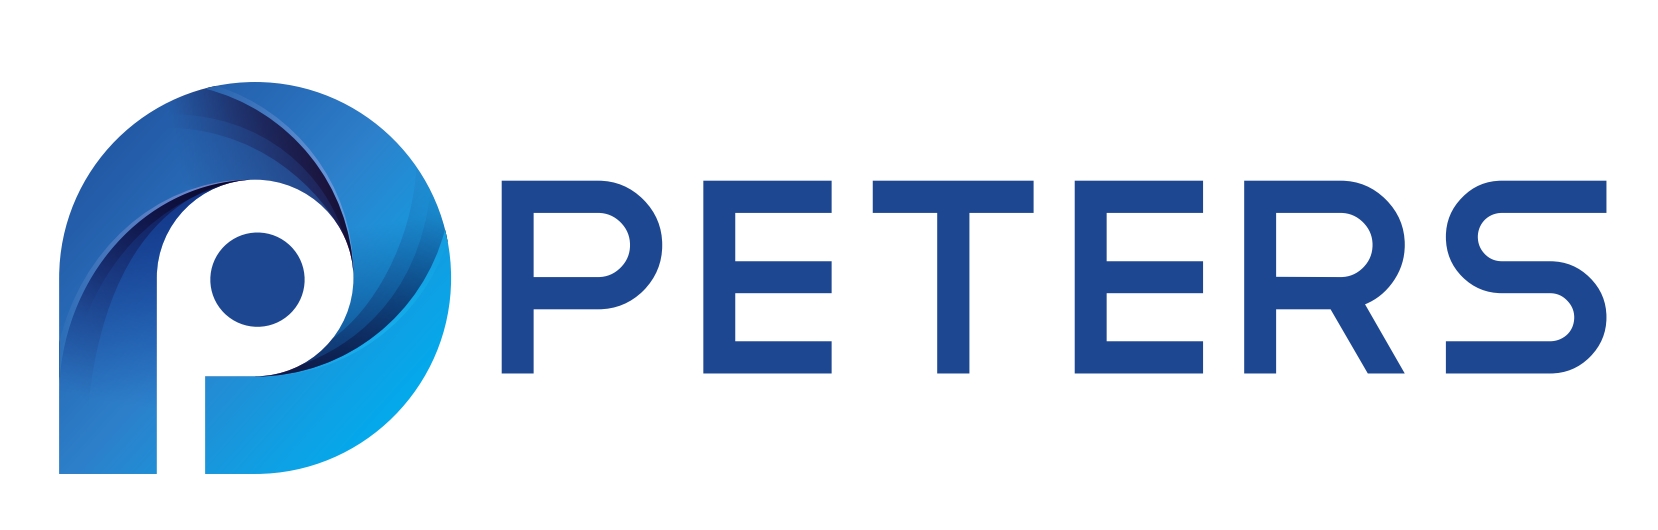 Abfallmanagement PETERS GmbH